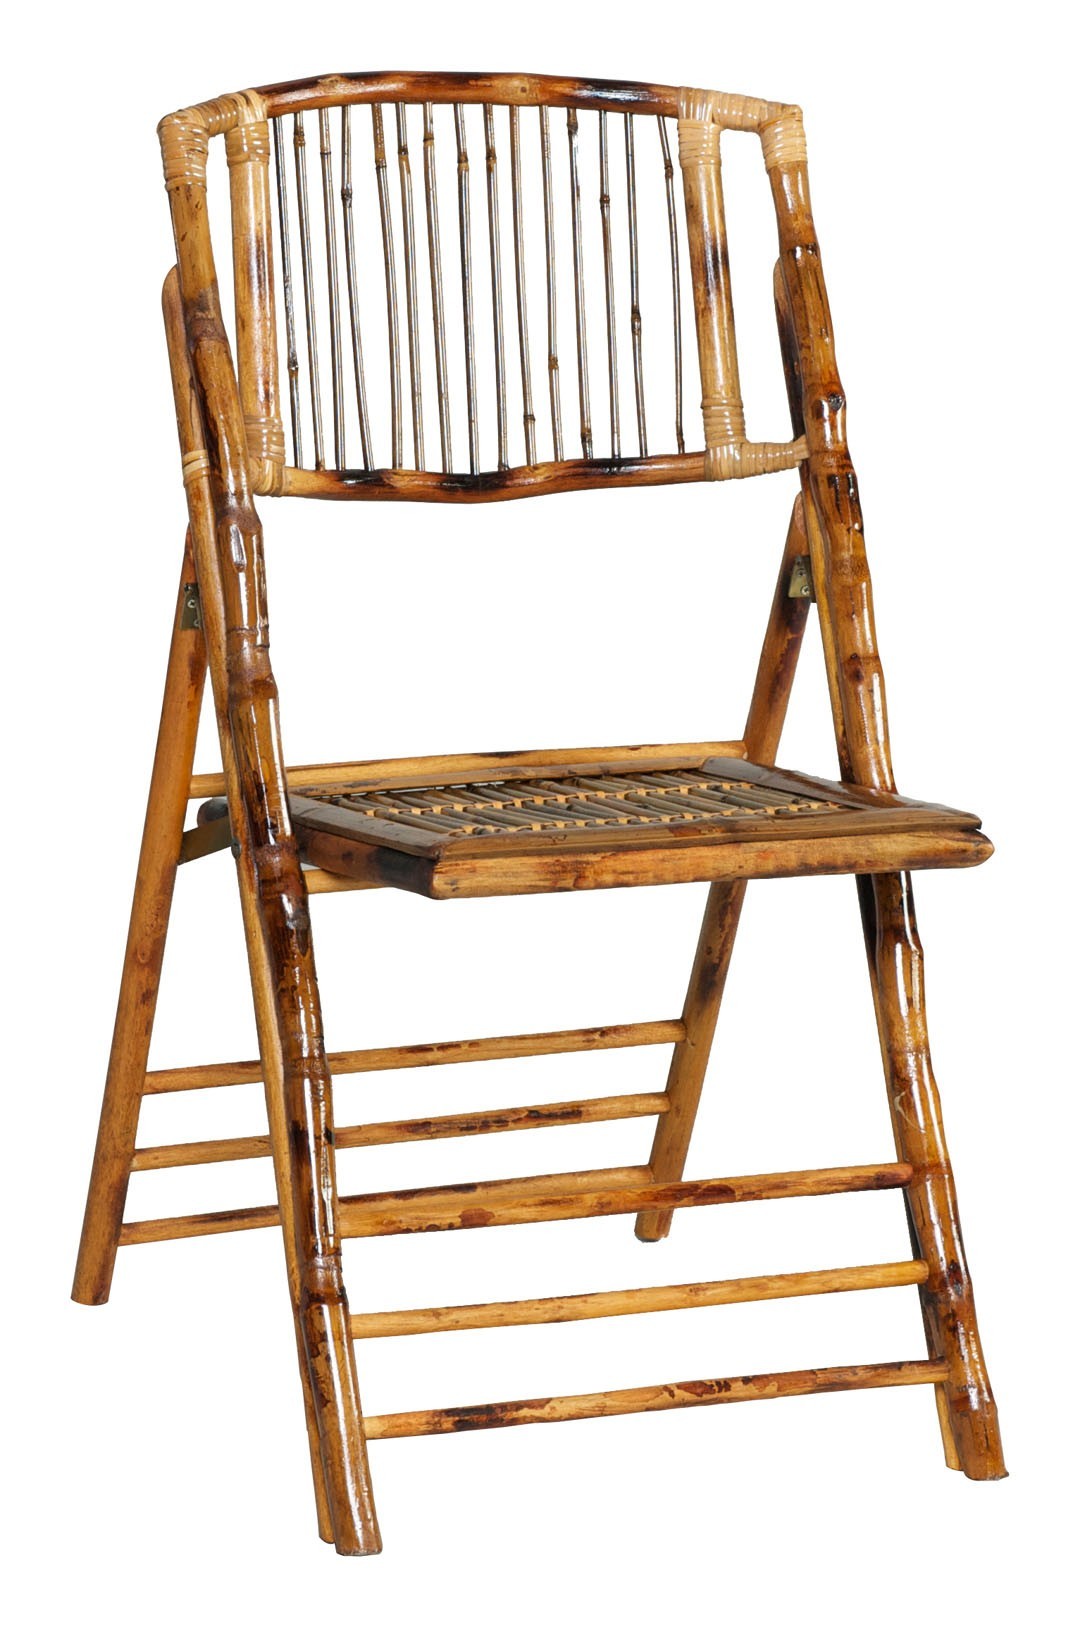 Bamboo chairs rental